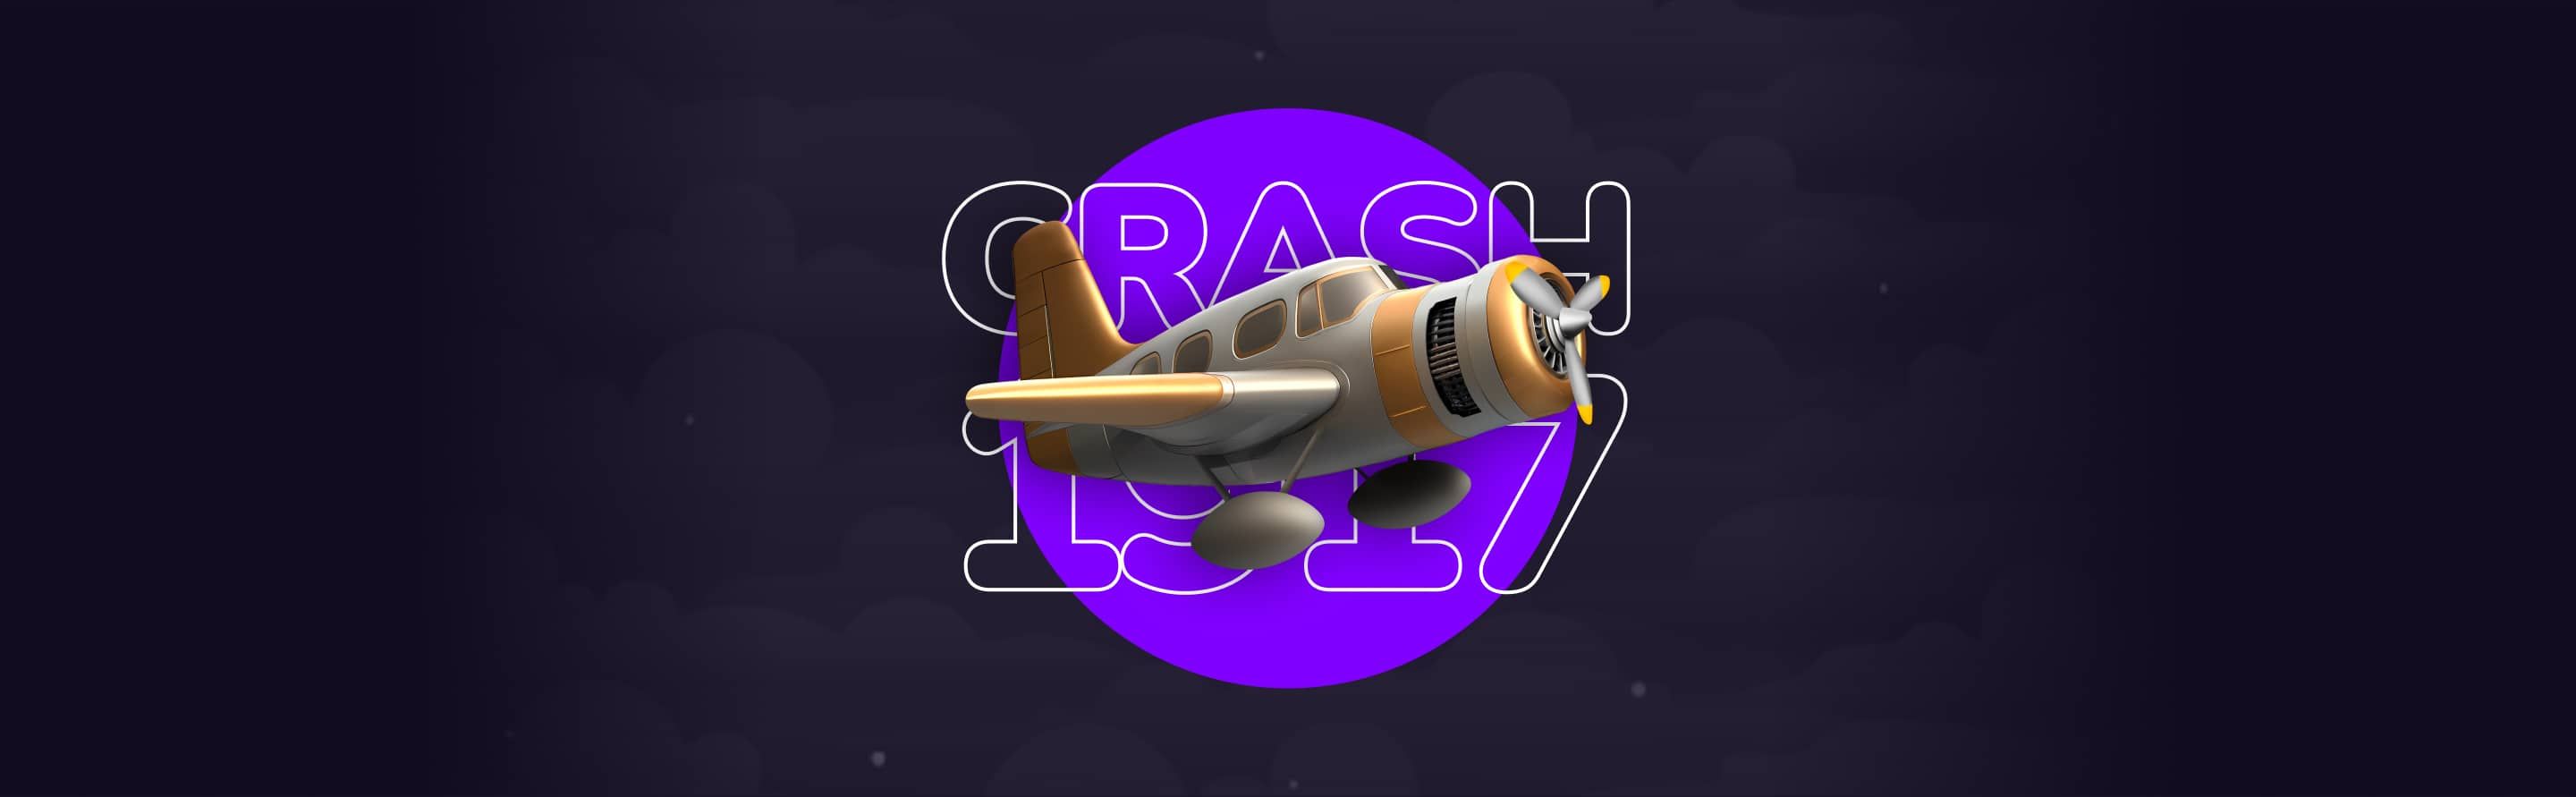 Crash 1917 | Gameplay Banner